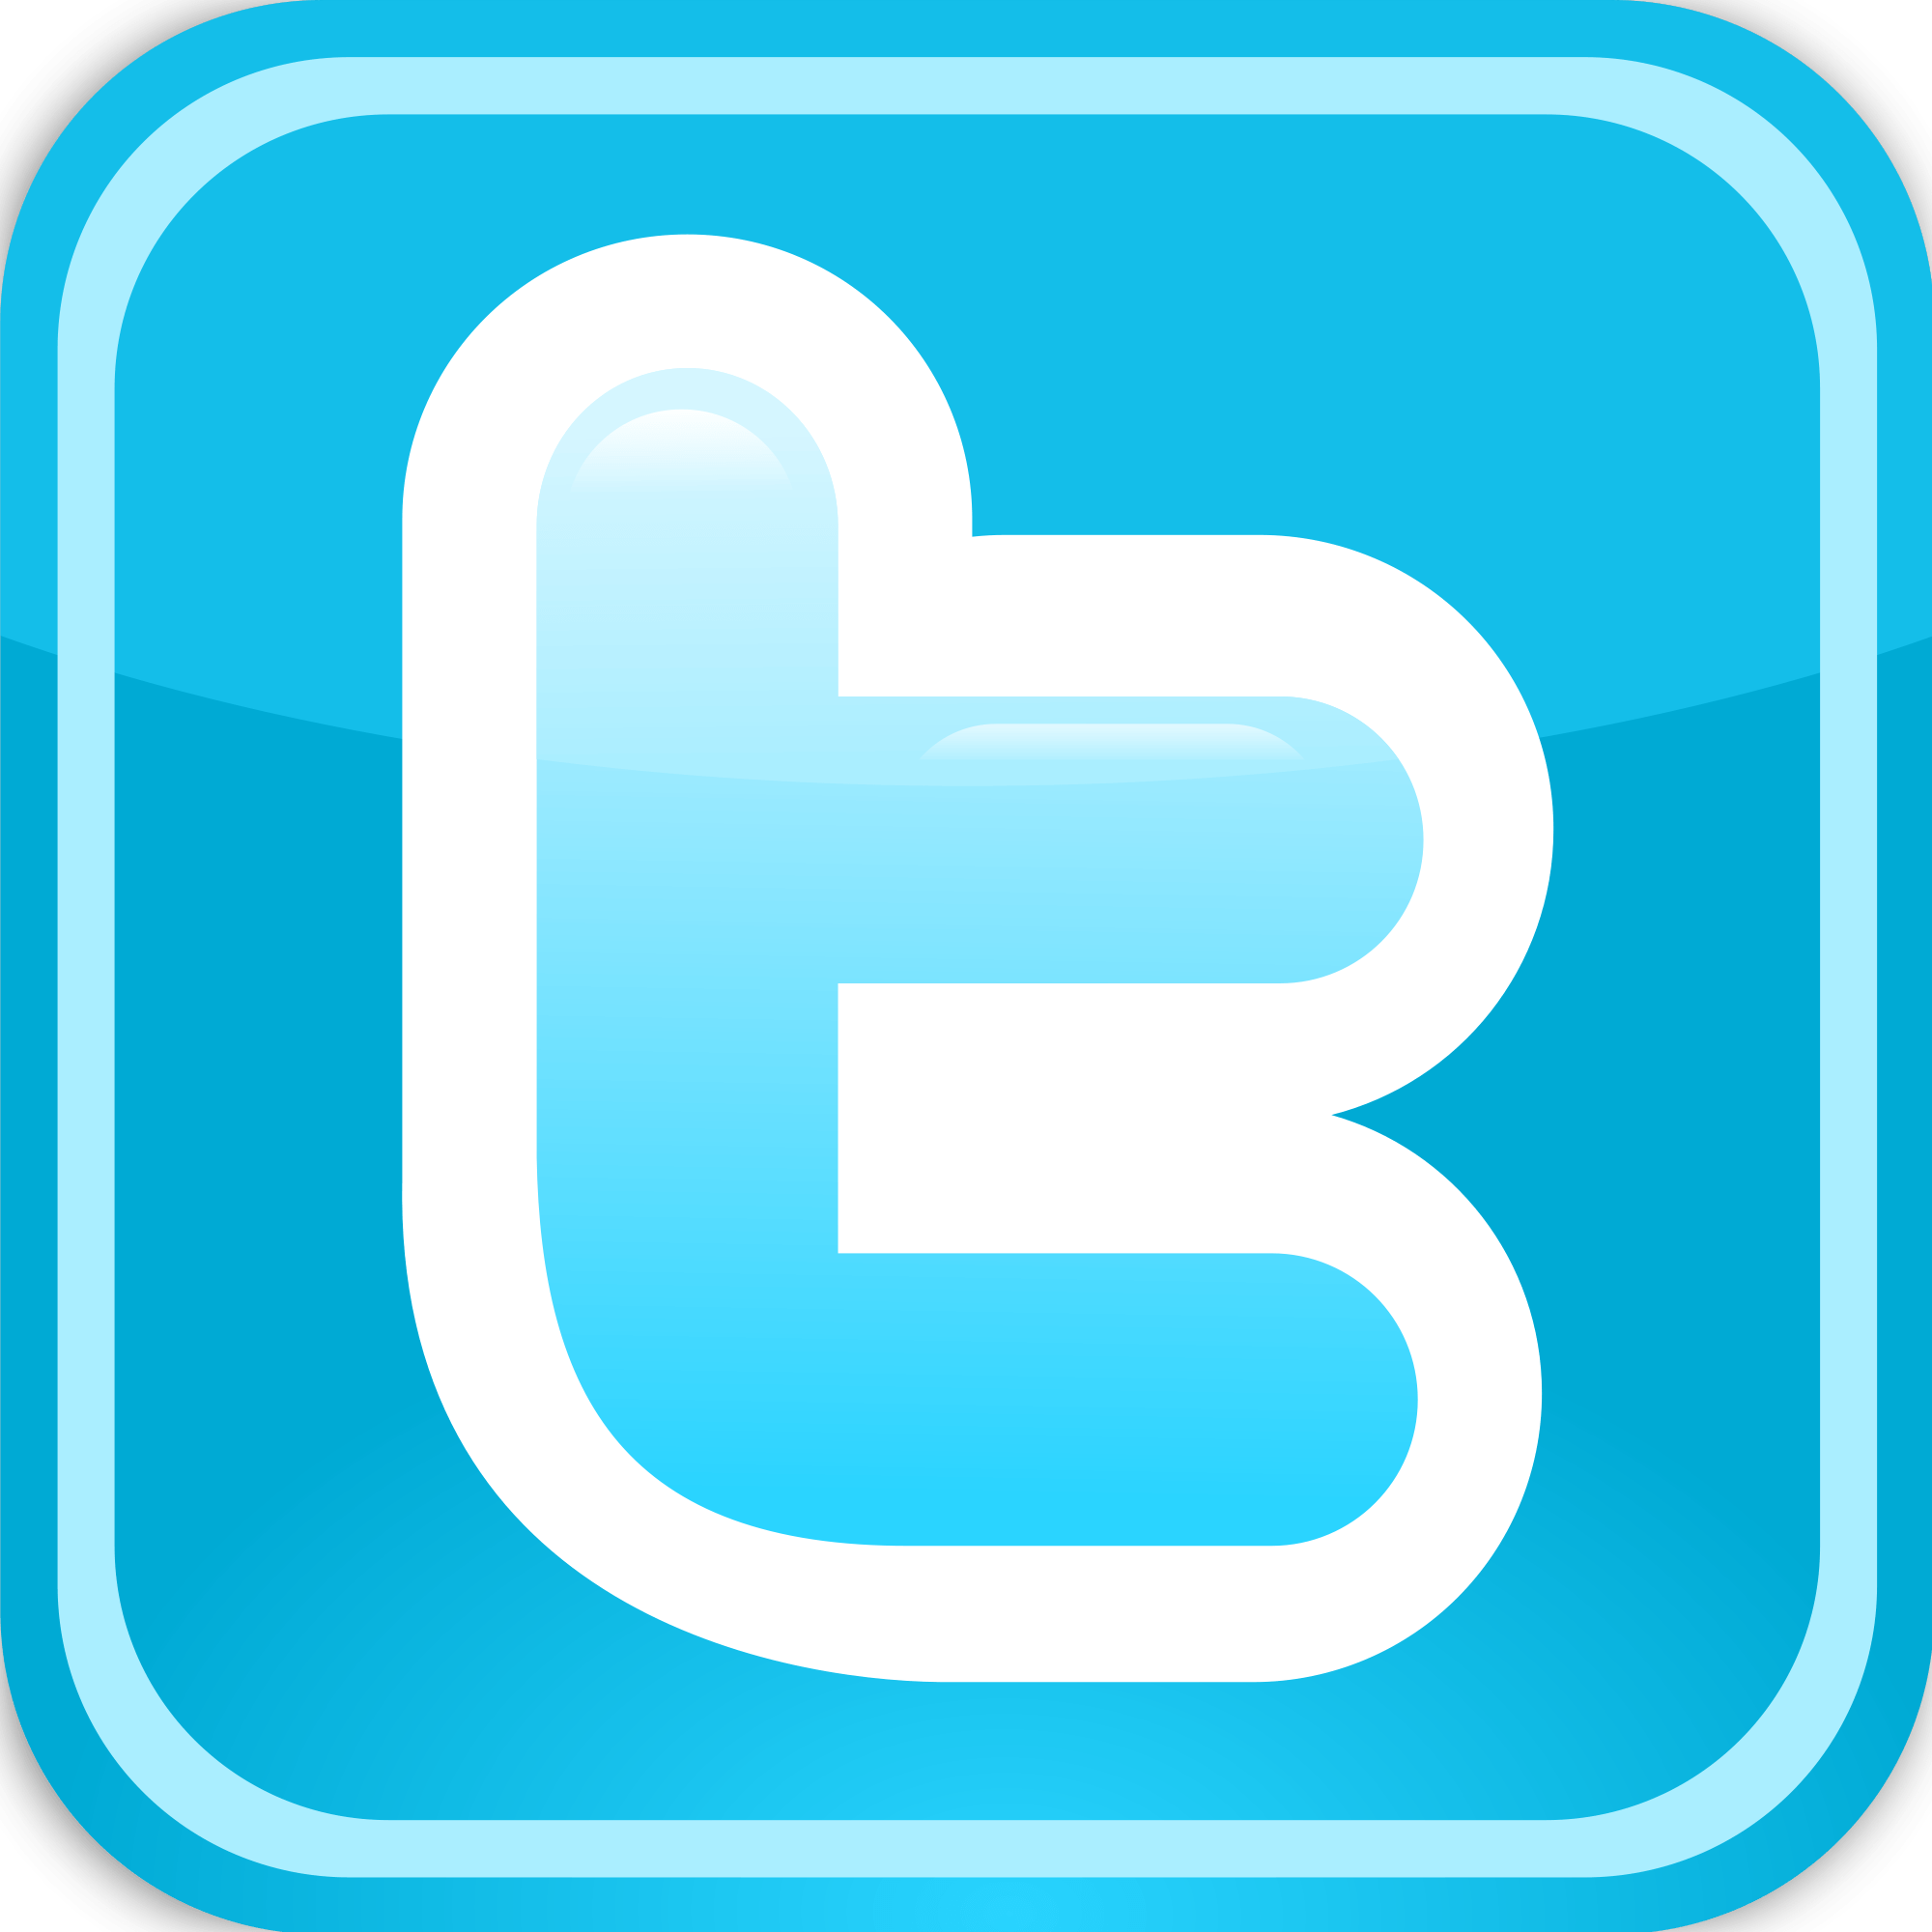 New Twitter Logo - Old Twit Logo